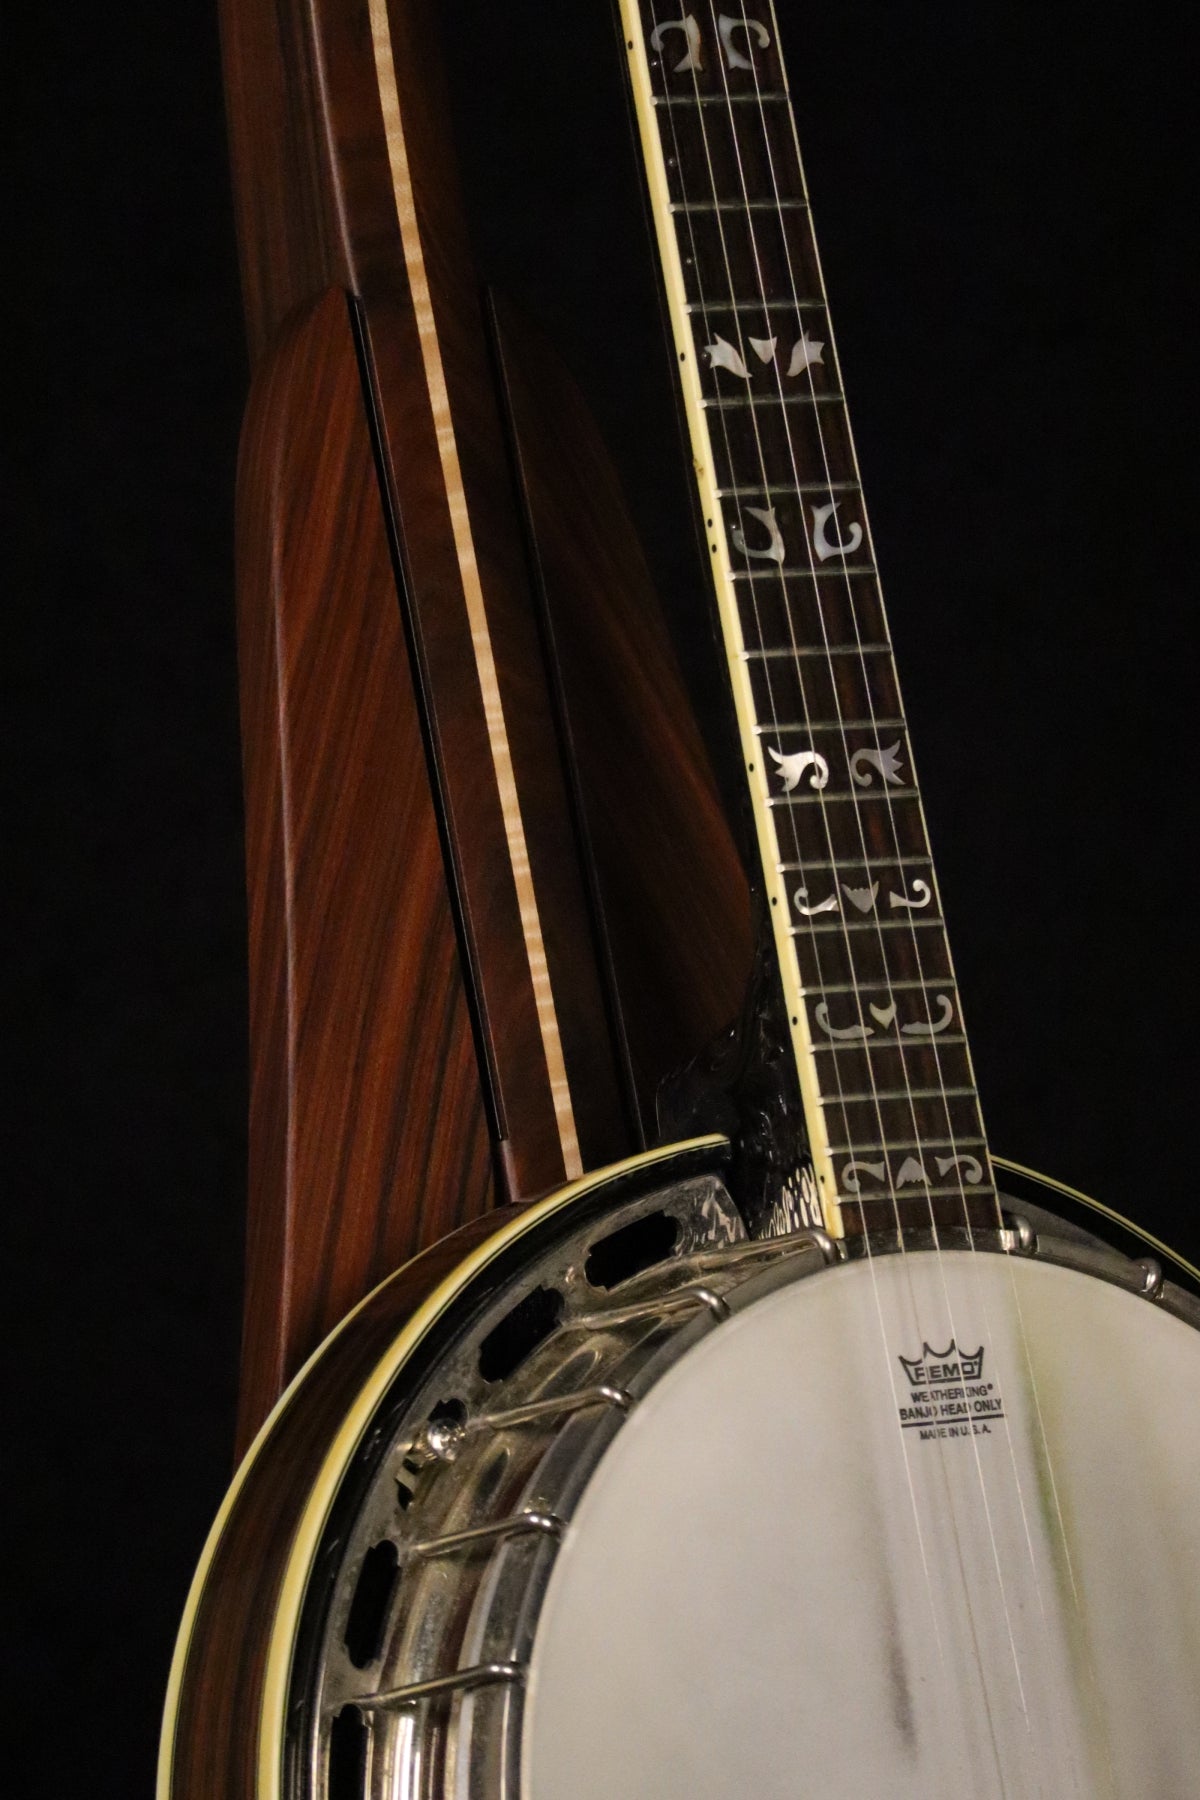 Folding morado Bolivian rosewood pau fero and curly maple wood banjo floor stand closeup front image with Alvarez banjo